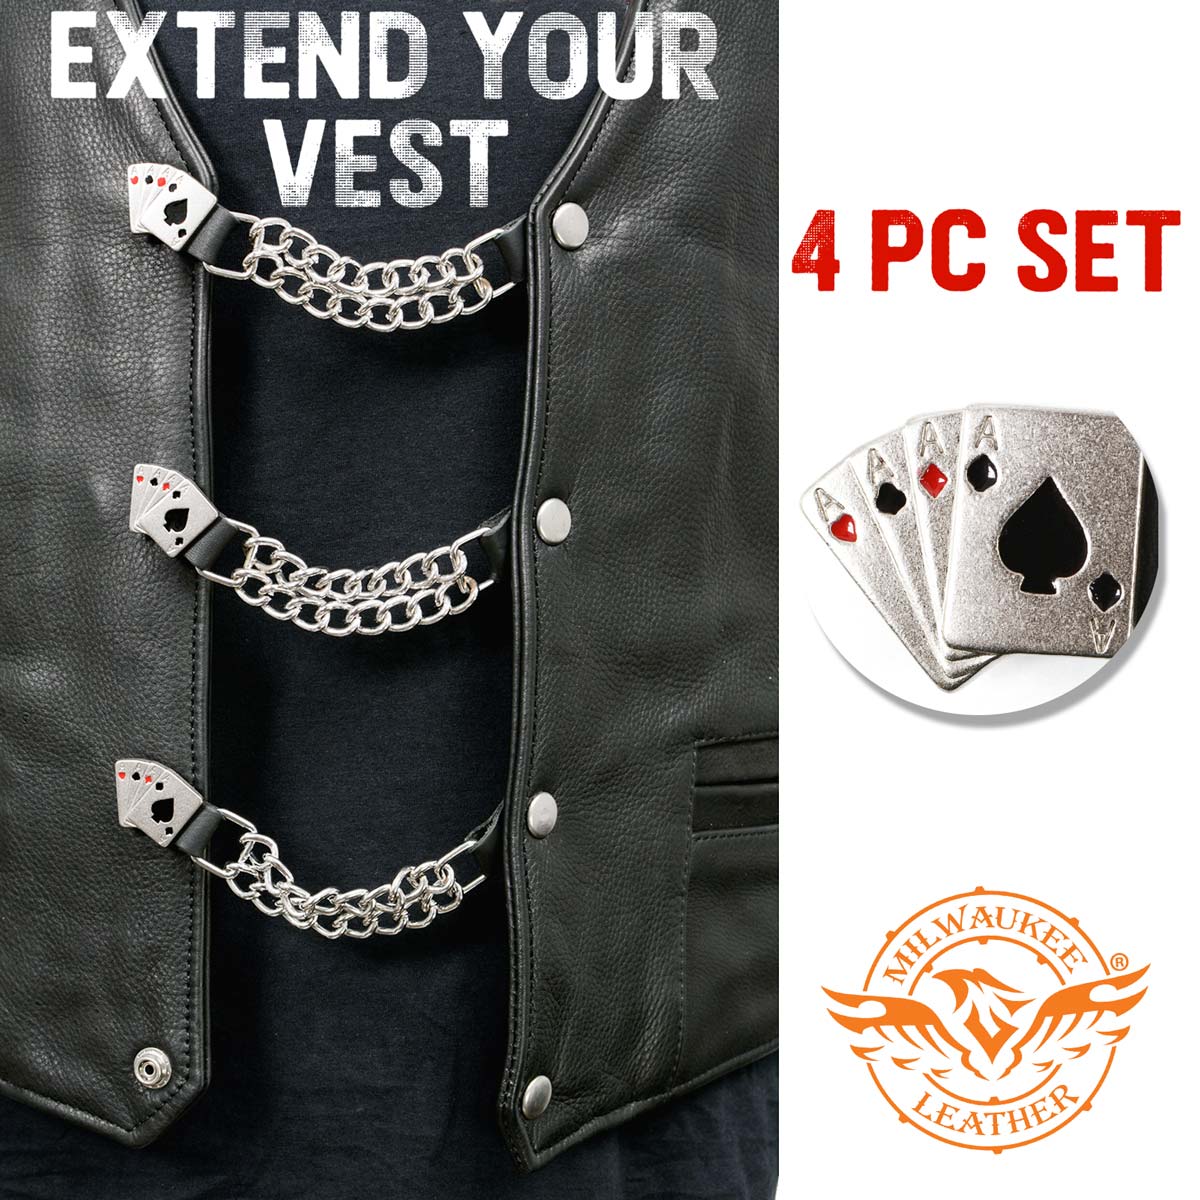 Milwaukee Leather 4 Aces Medallion Vest Extender - Double Chrome Chains Genuine Leather 6.5" Extension 4-PCS MLA6007SET